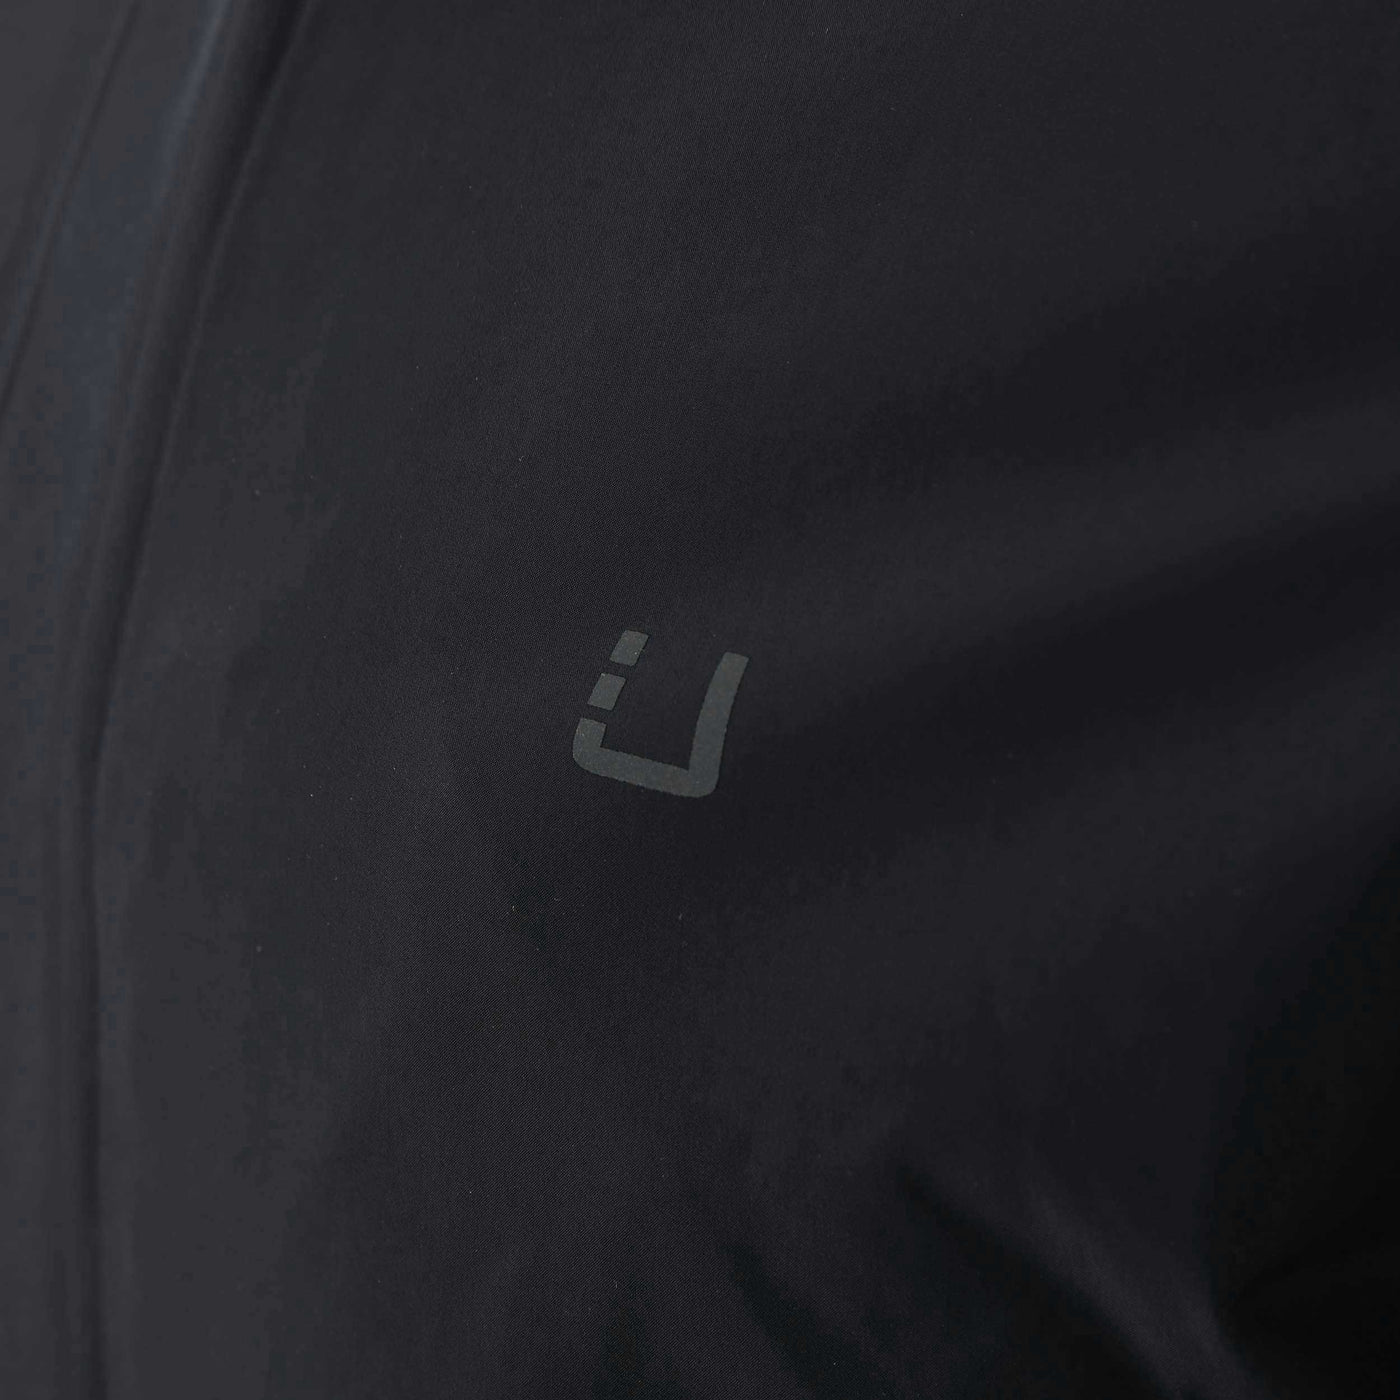 UBR Regulator Coat in Black Chest Logo